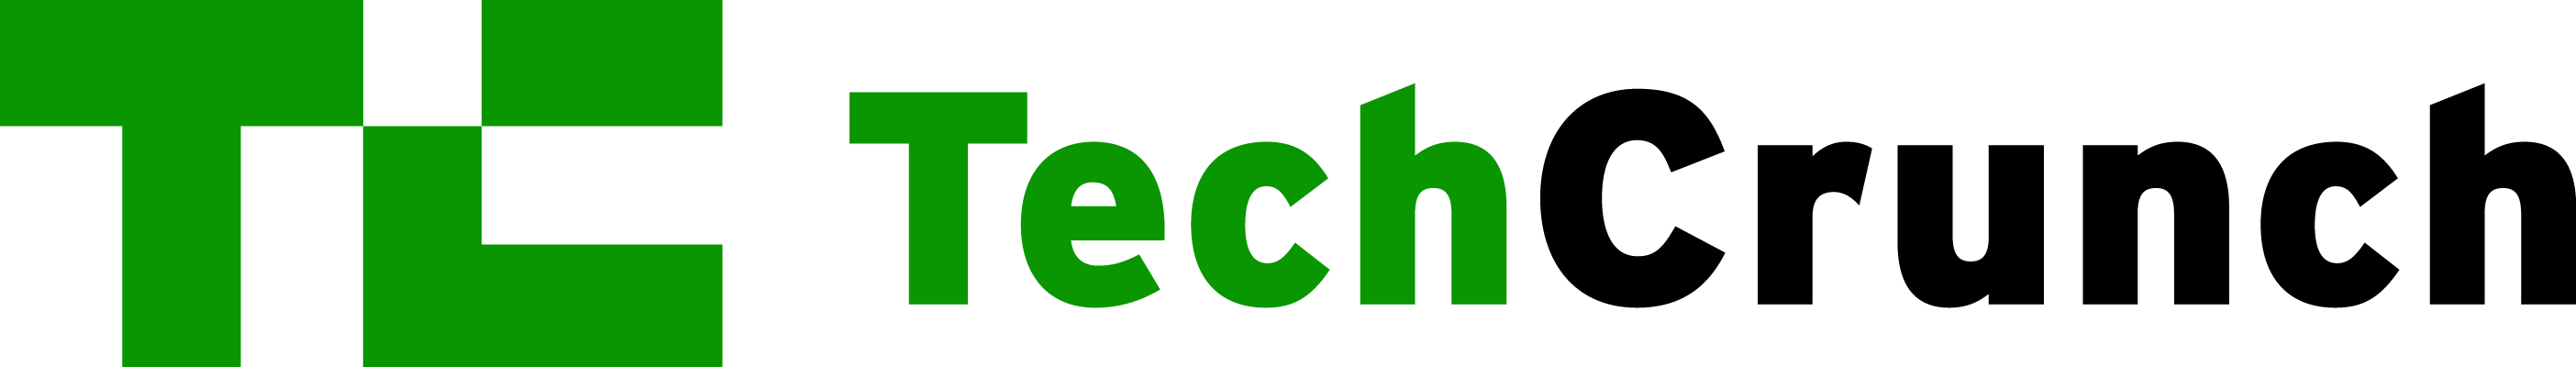 tc techcrunch logo